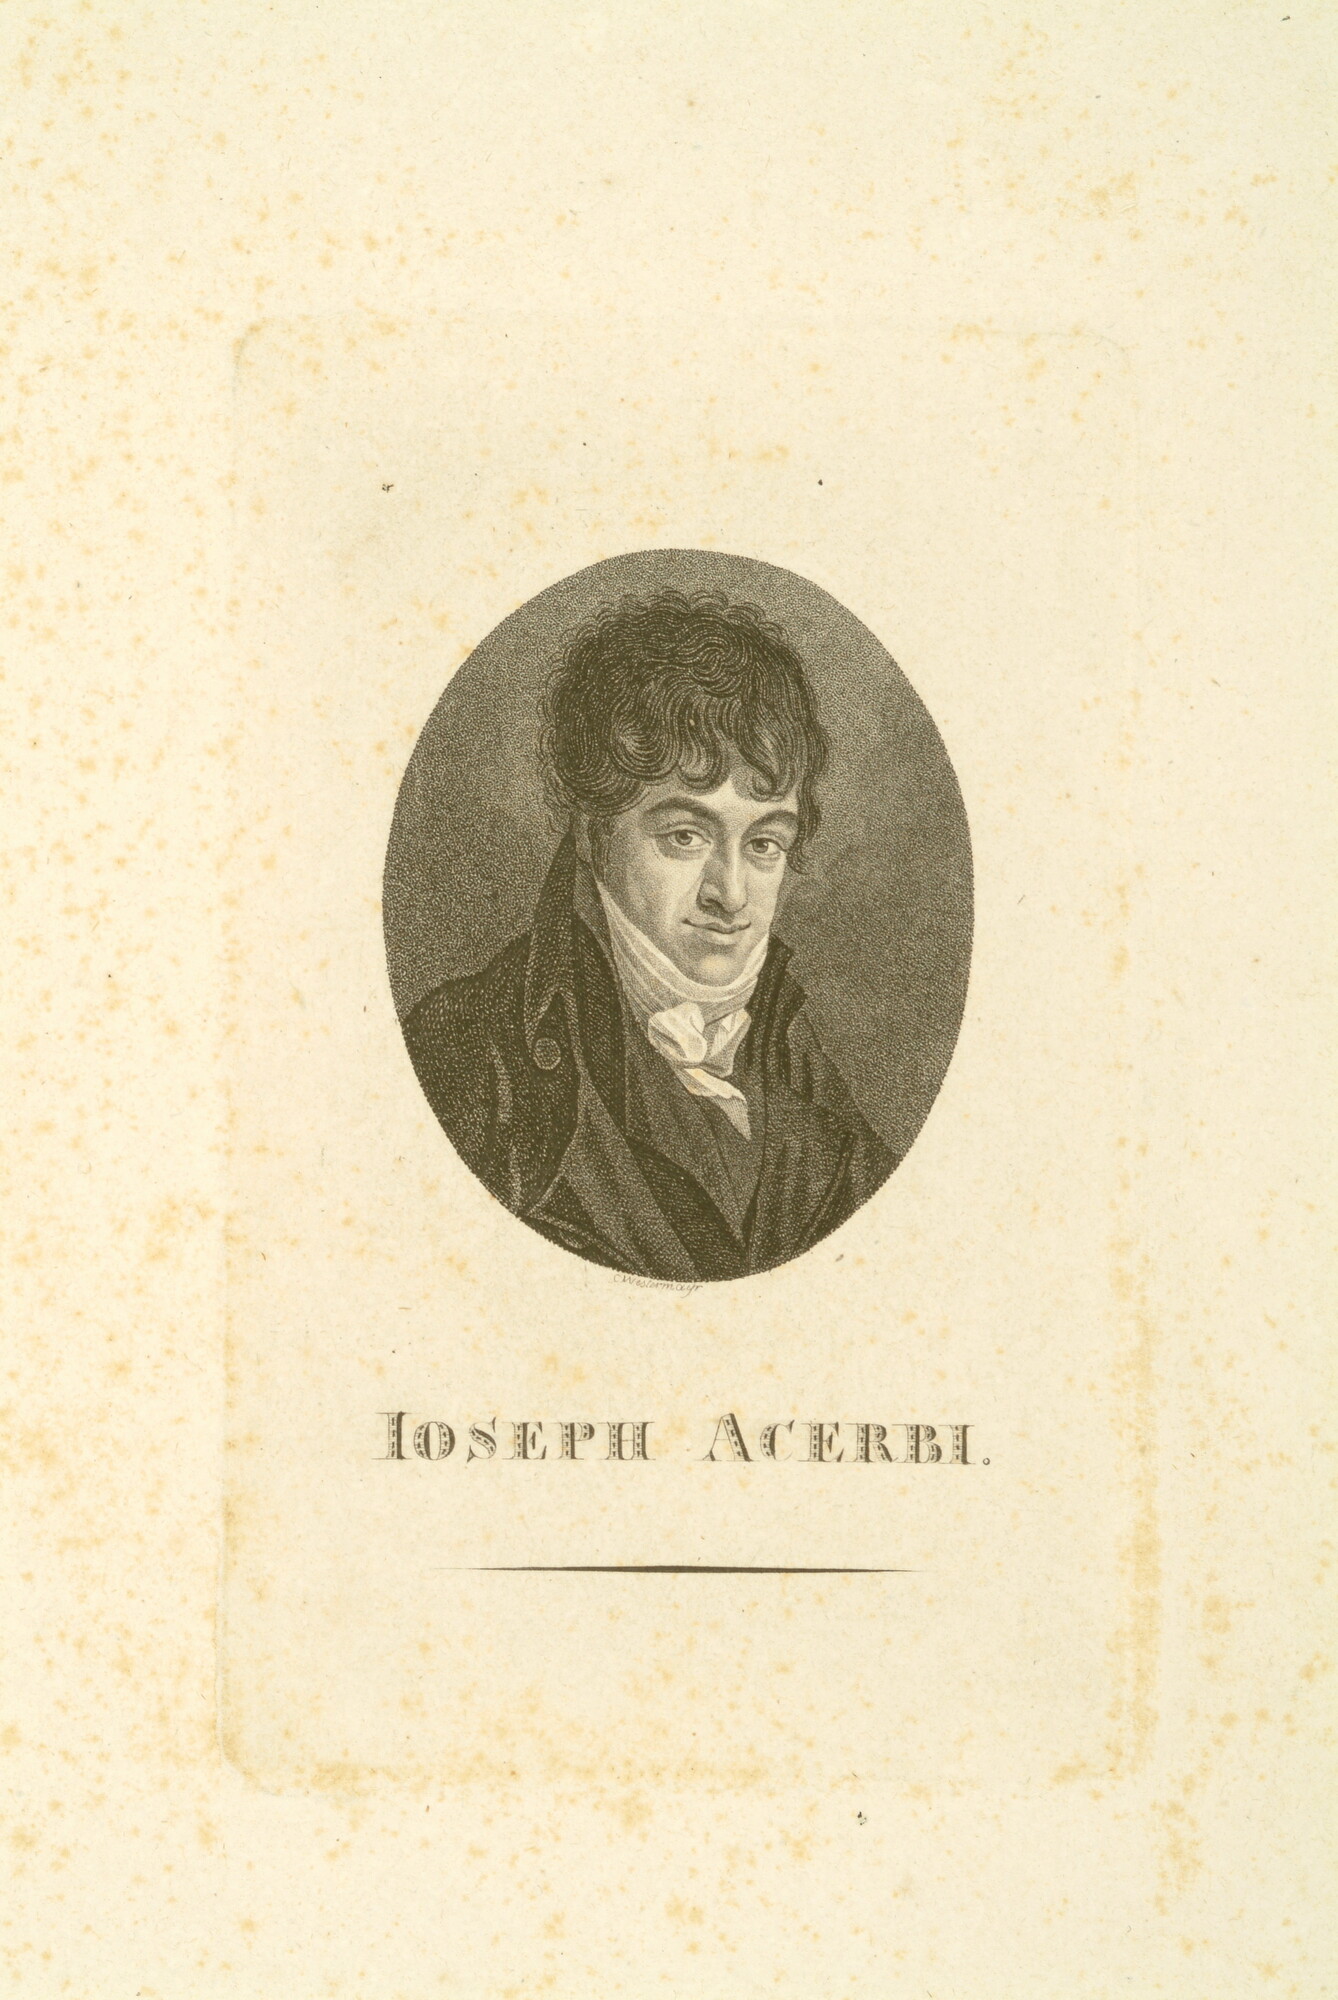 A.0075(060); Portret van de reiziger Joseph Acerbi; prent